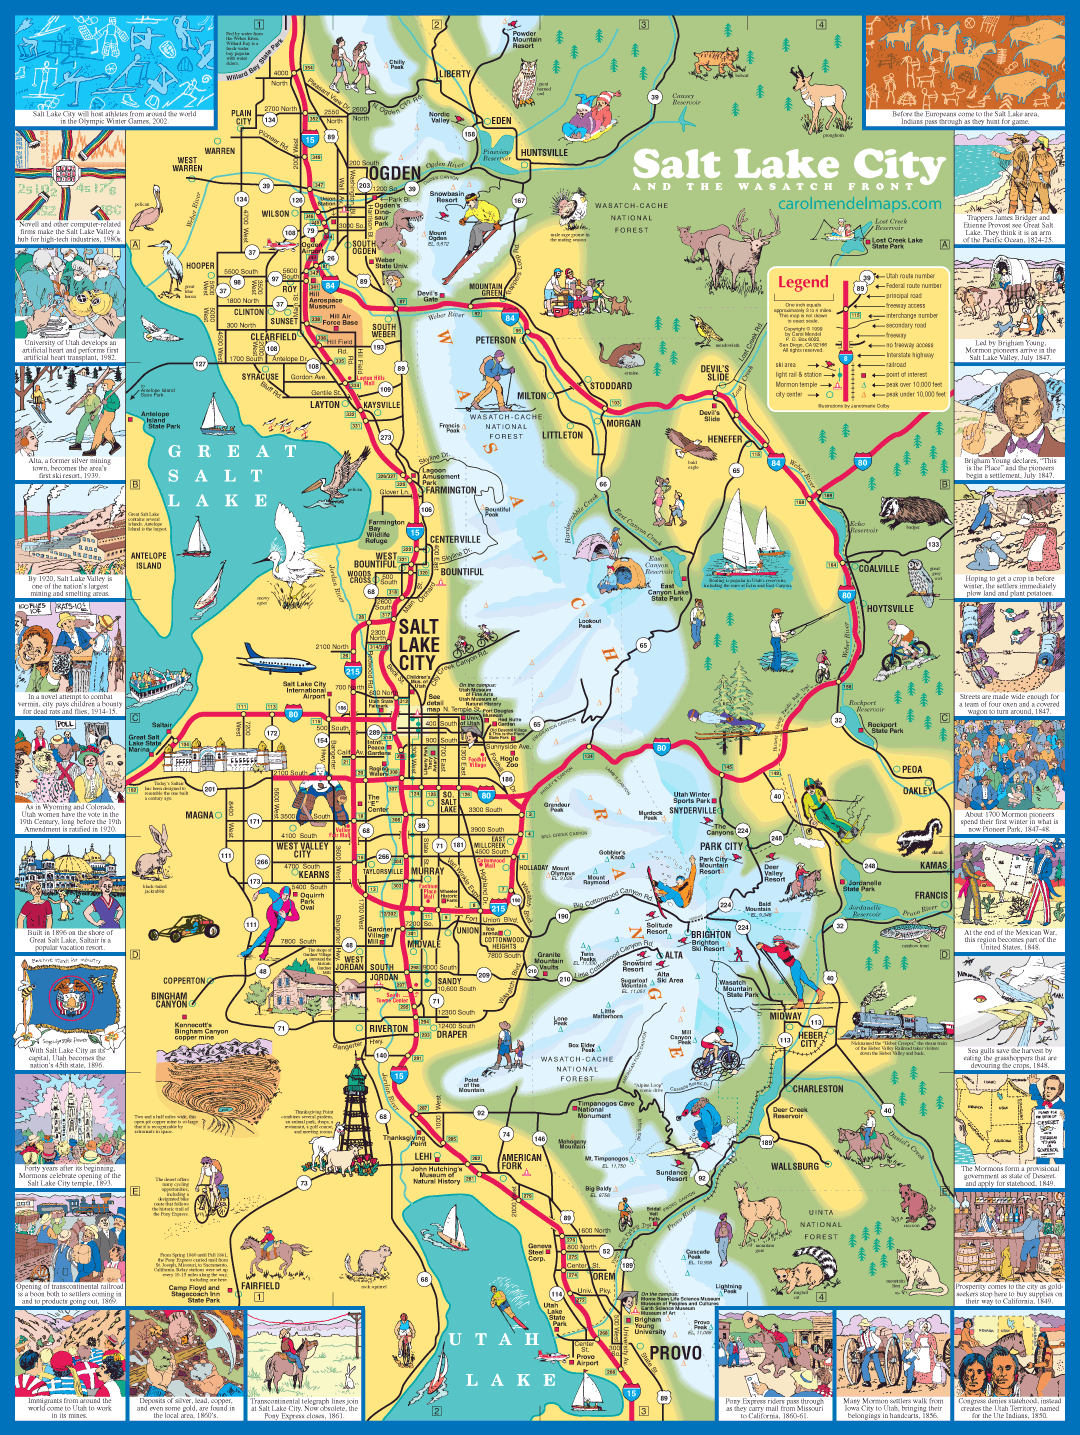 pictorial, illustrated map of the Salt Lake City metropolitan area